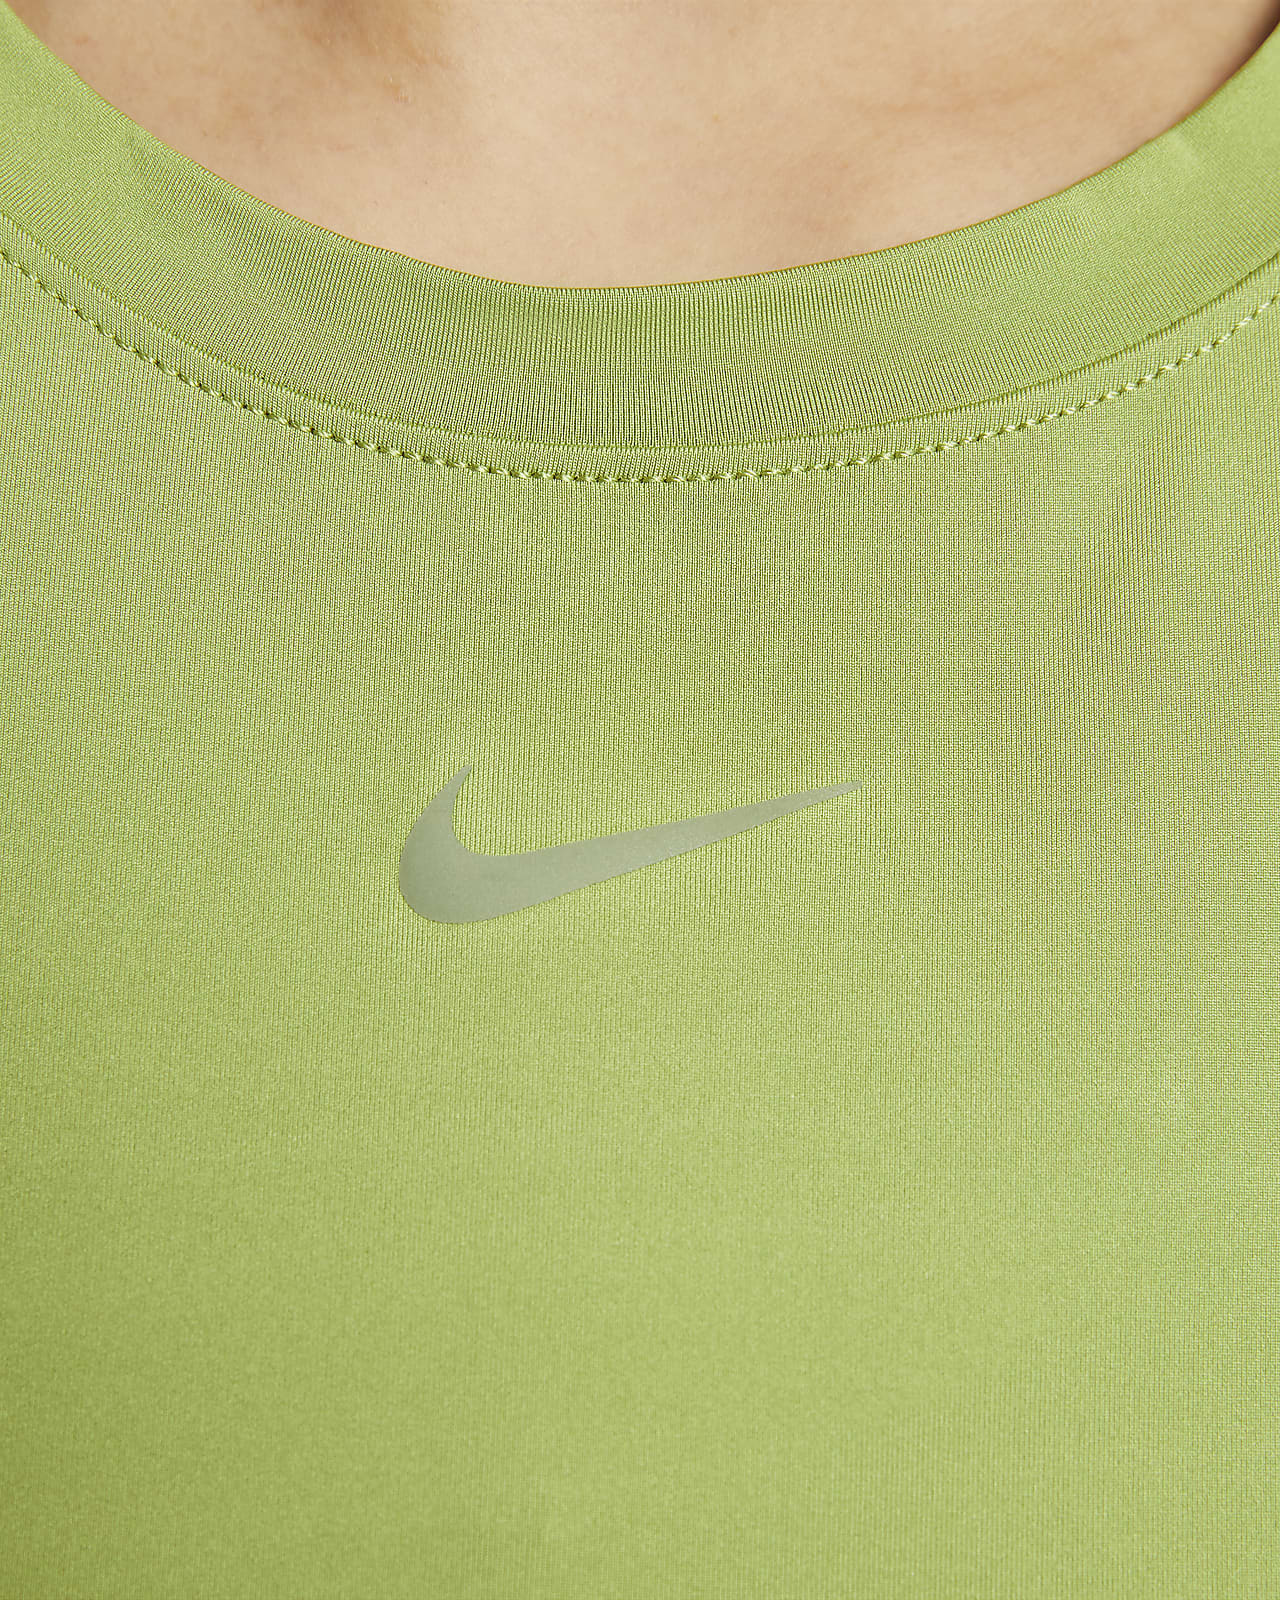 Nike Training One Dri-FIT slim vest in pink, DD0623-621